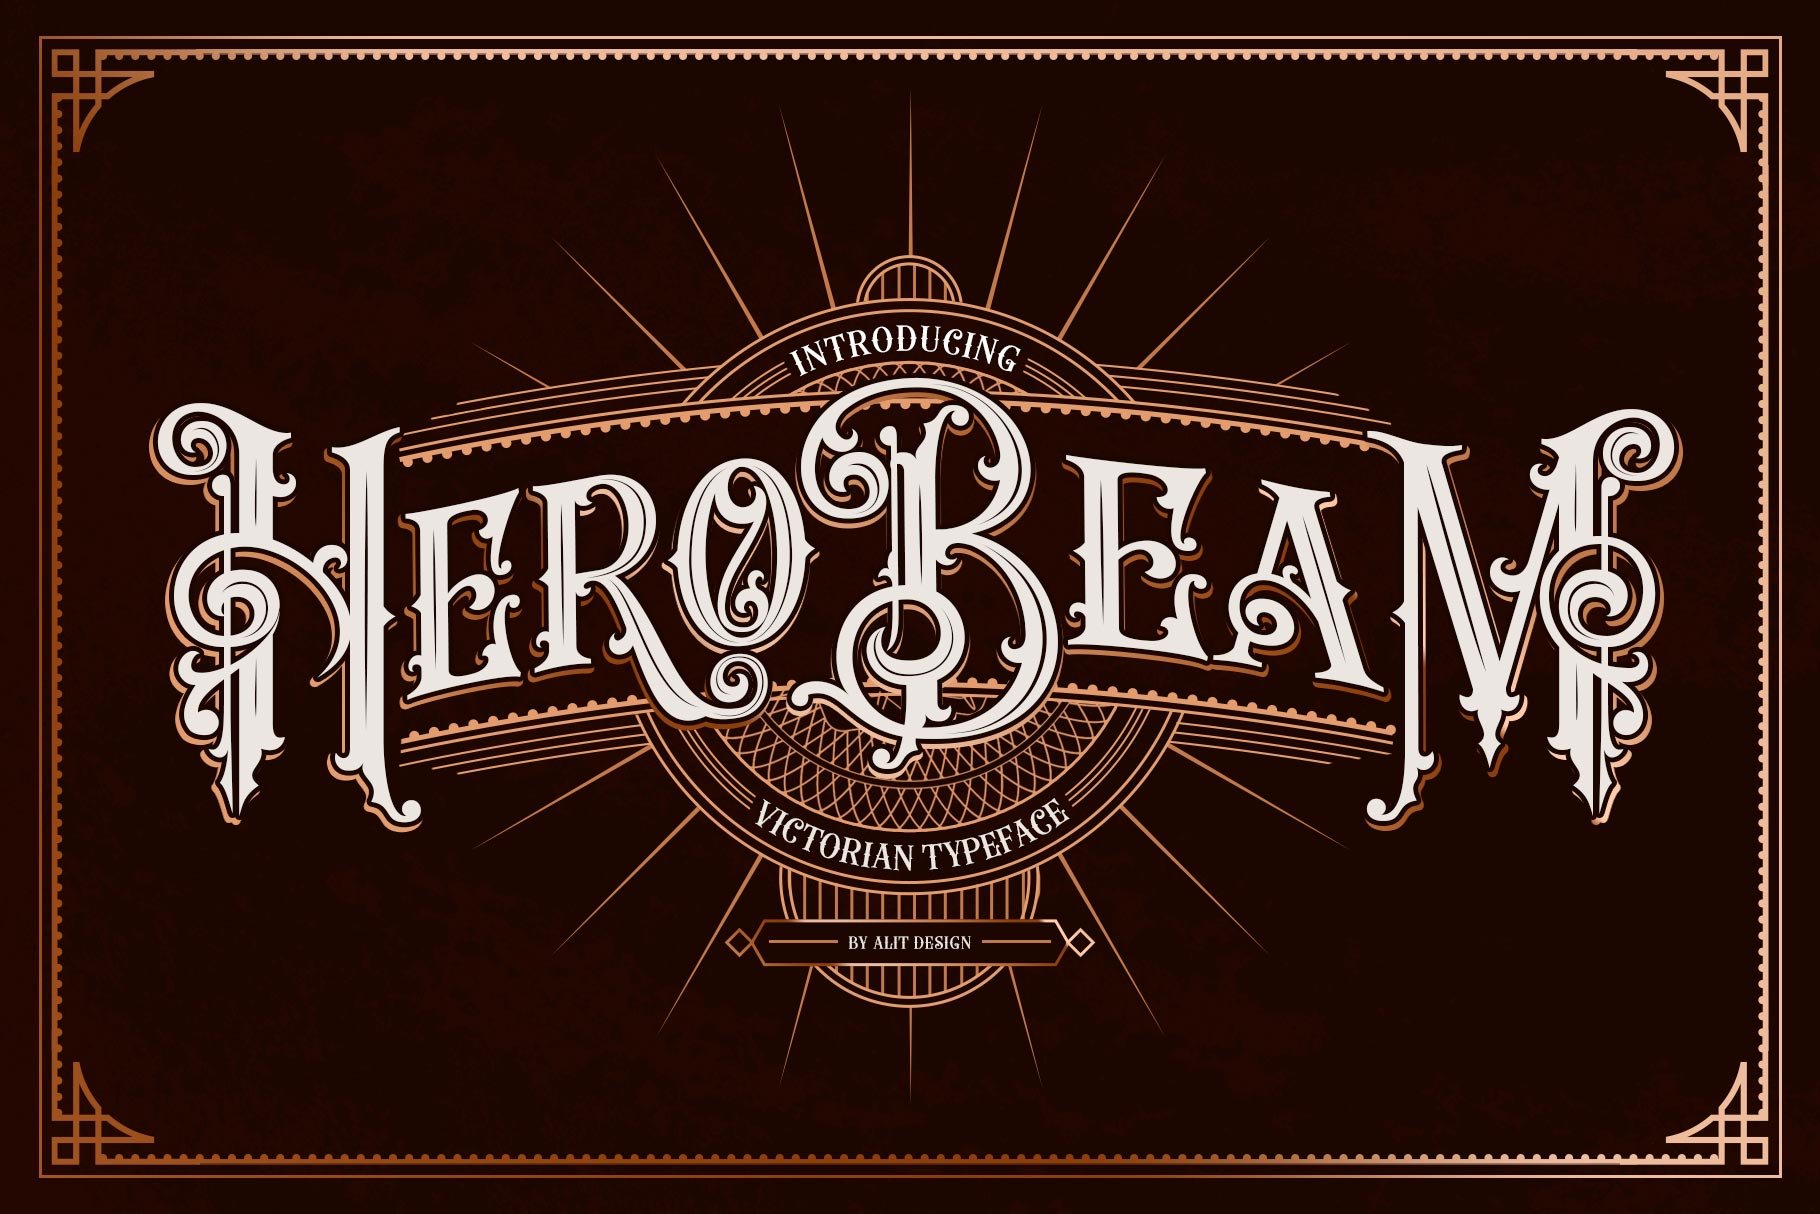 Hero Beam Typeface cover image.